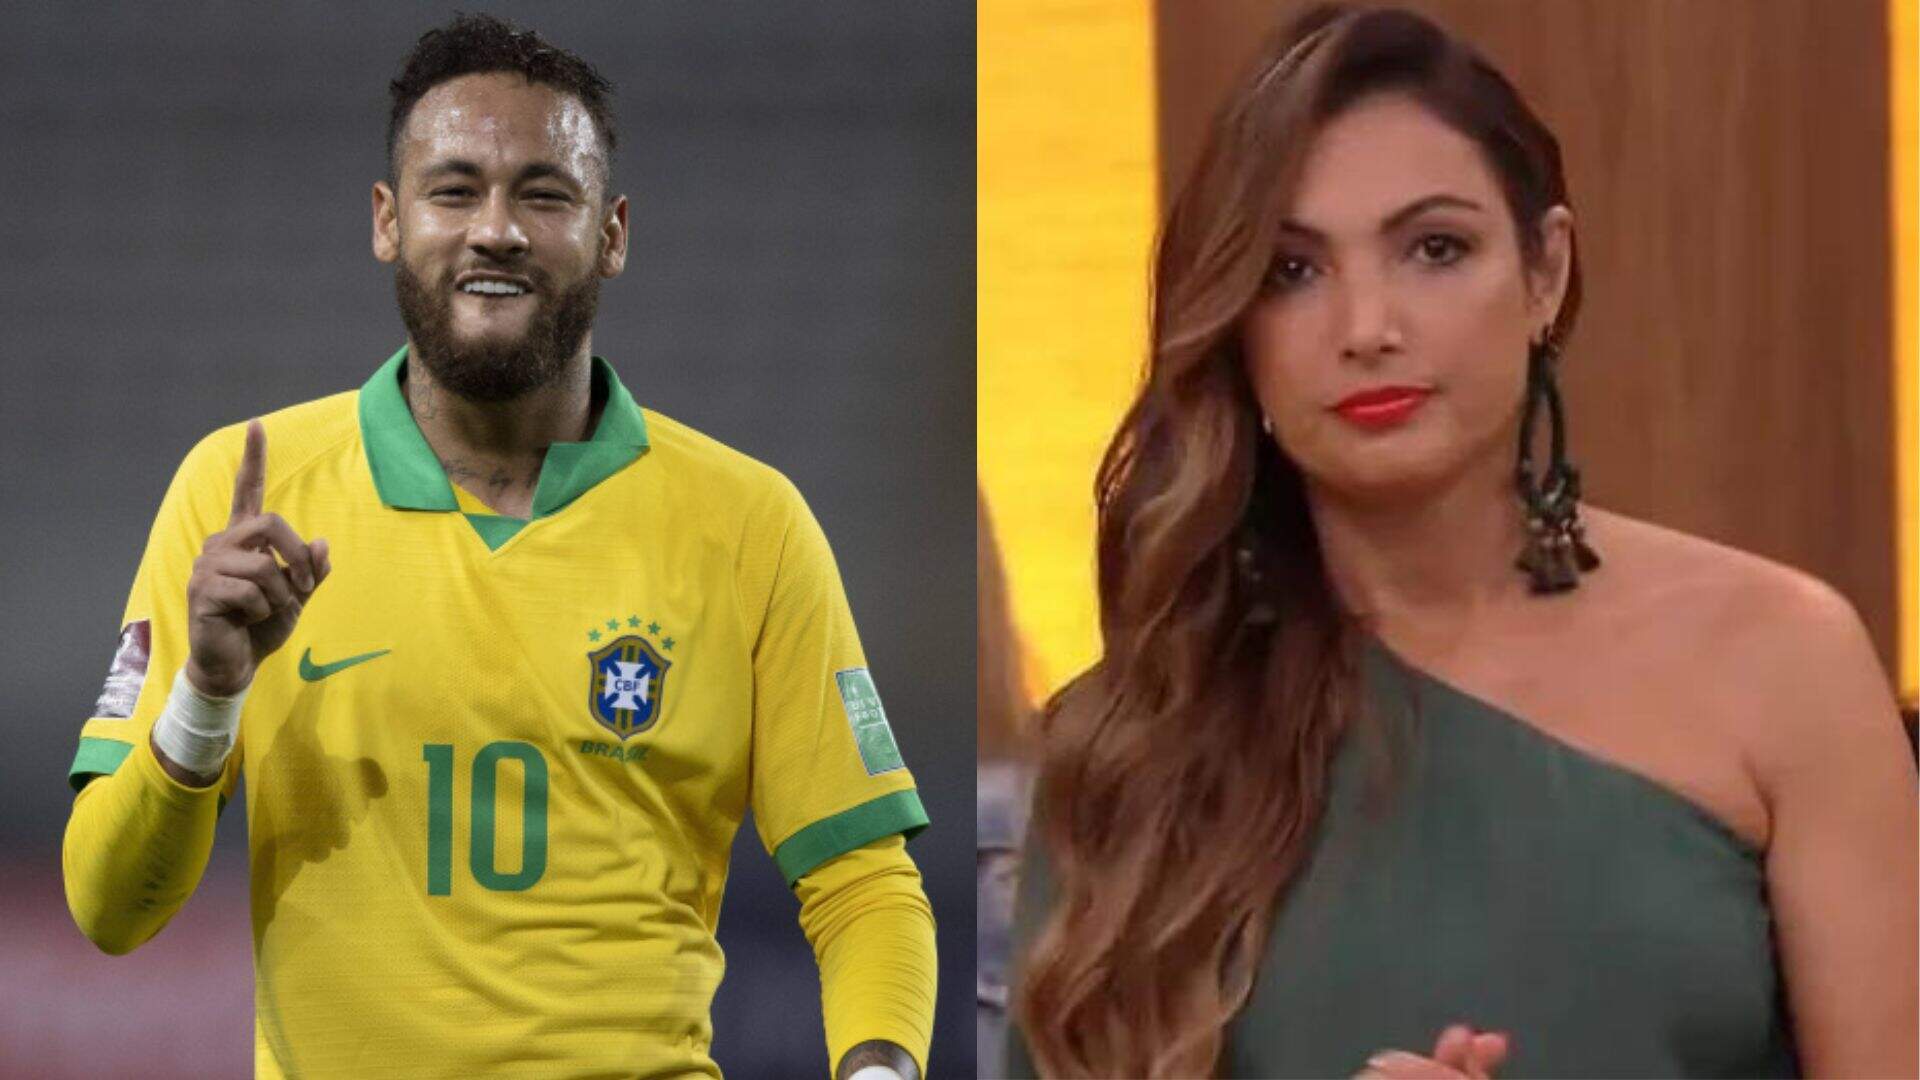 Copa do Mundo derruba “Encontro” da grade da TV Globo